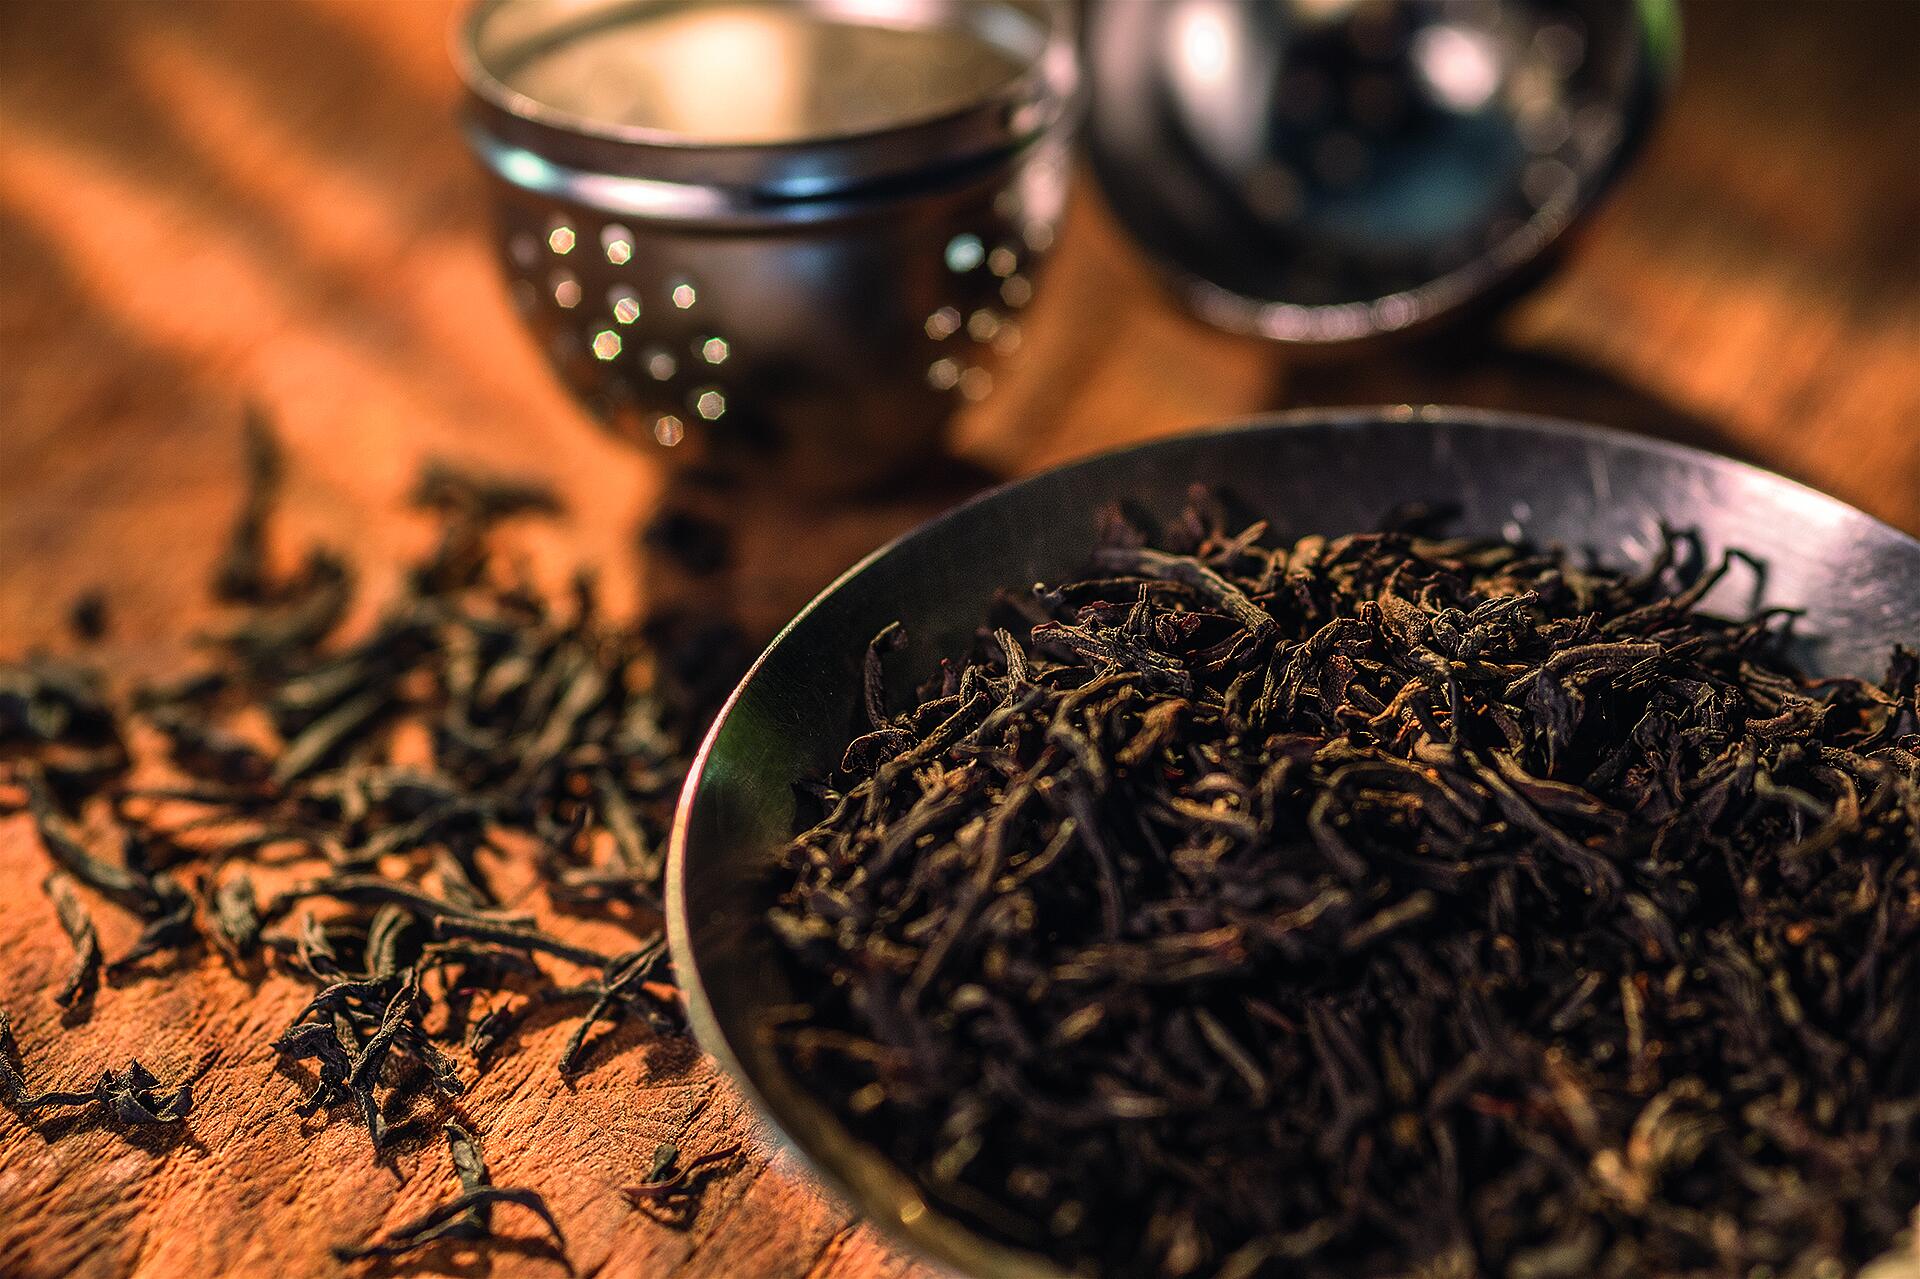 China Black Gunpowder Organic Tea*